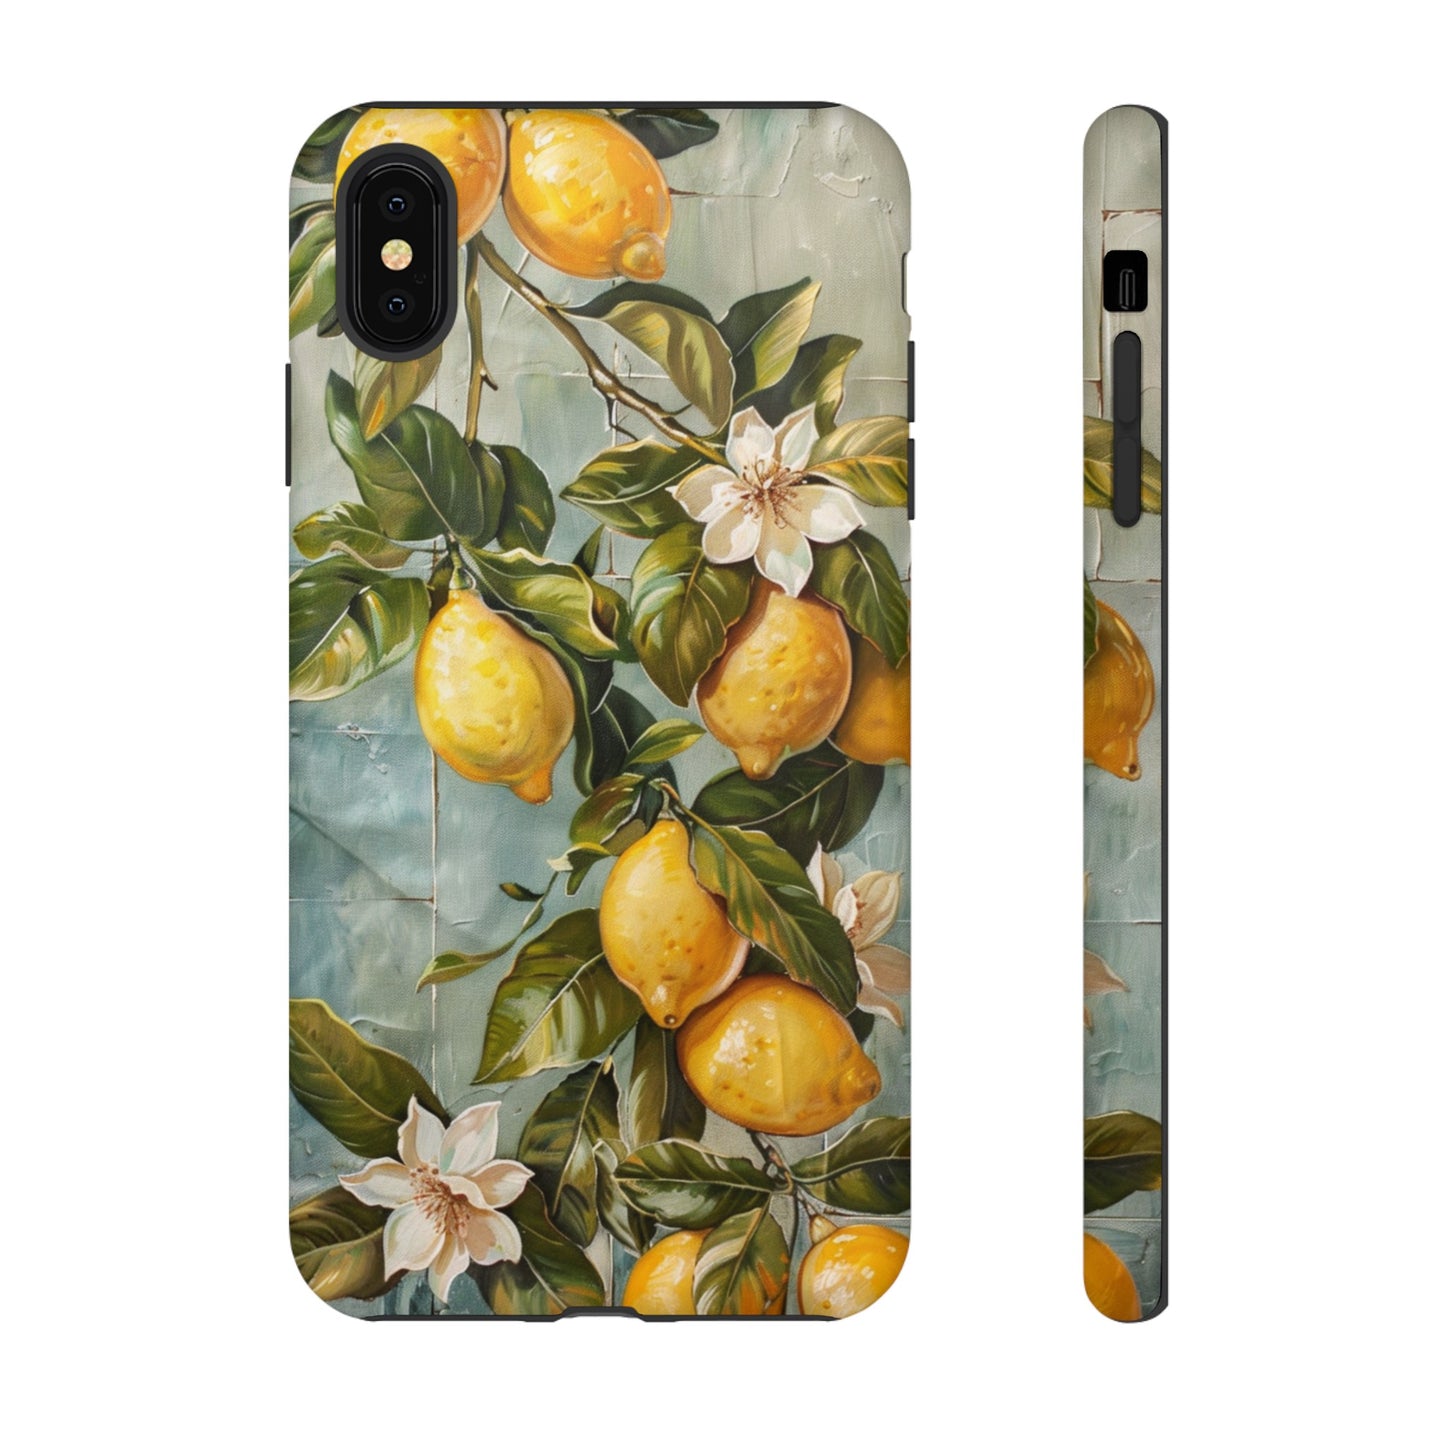 Best iPhone cases with Mediterranean tile design